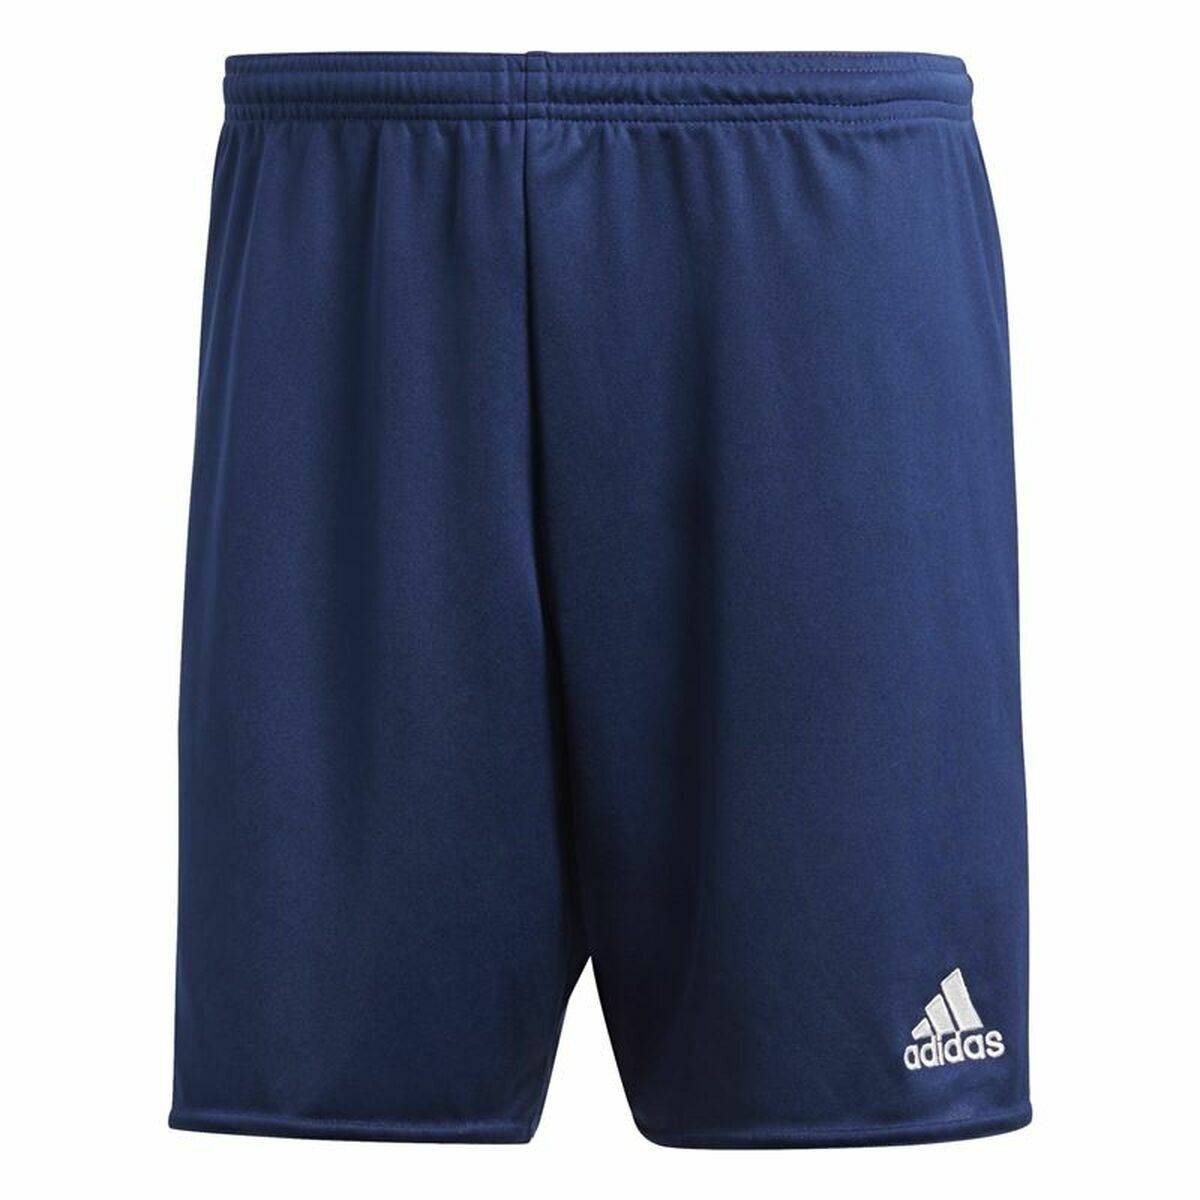 Pantaloncini Sportivi per Bambini Adidas Parma 16 Blu scuro